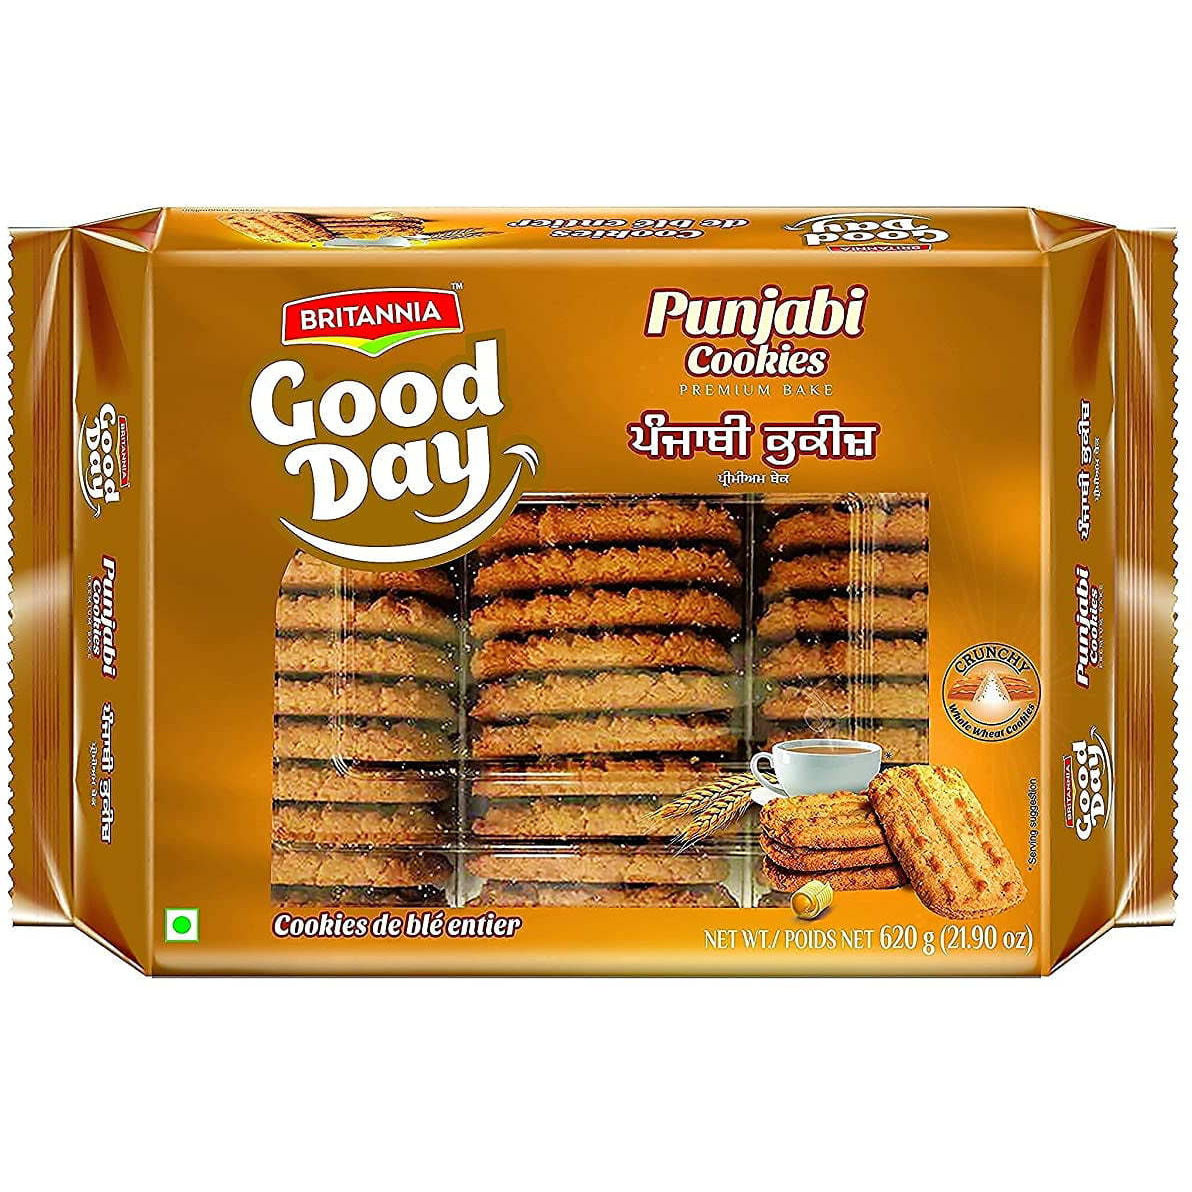 Britannia Good Day Punjabi Cookies - 620 Gm (21.90 Oz)